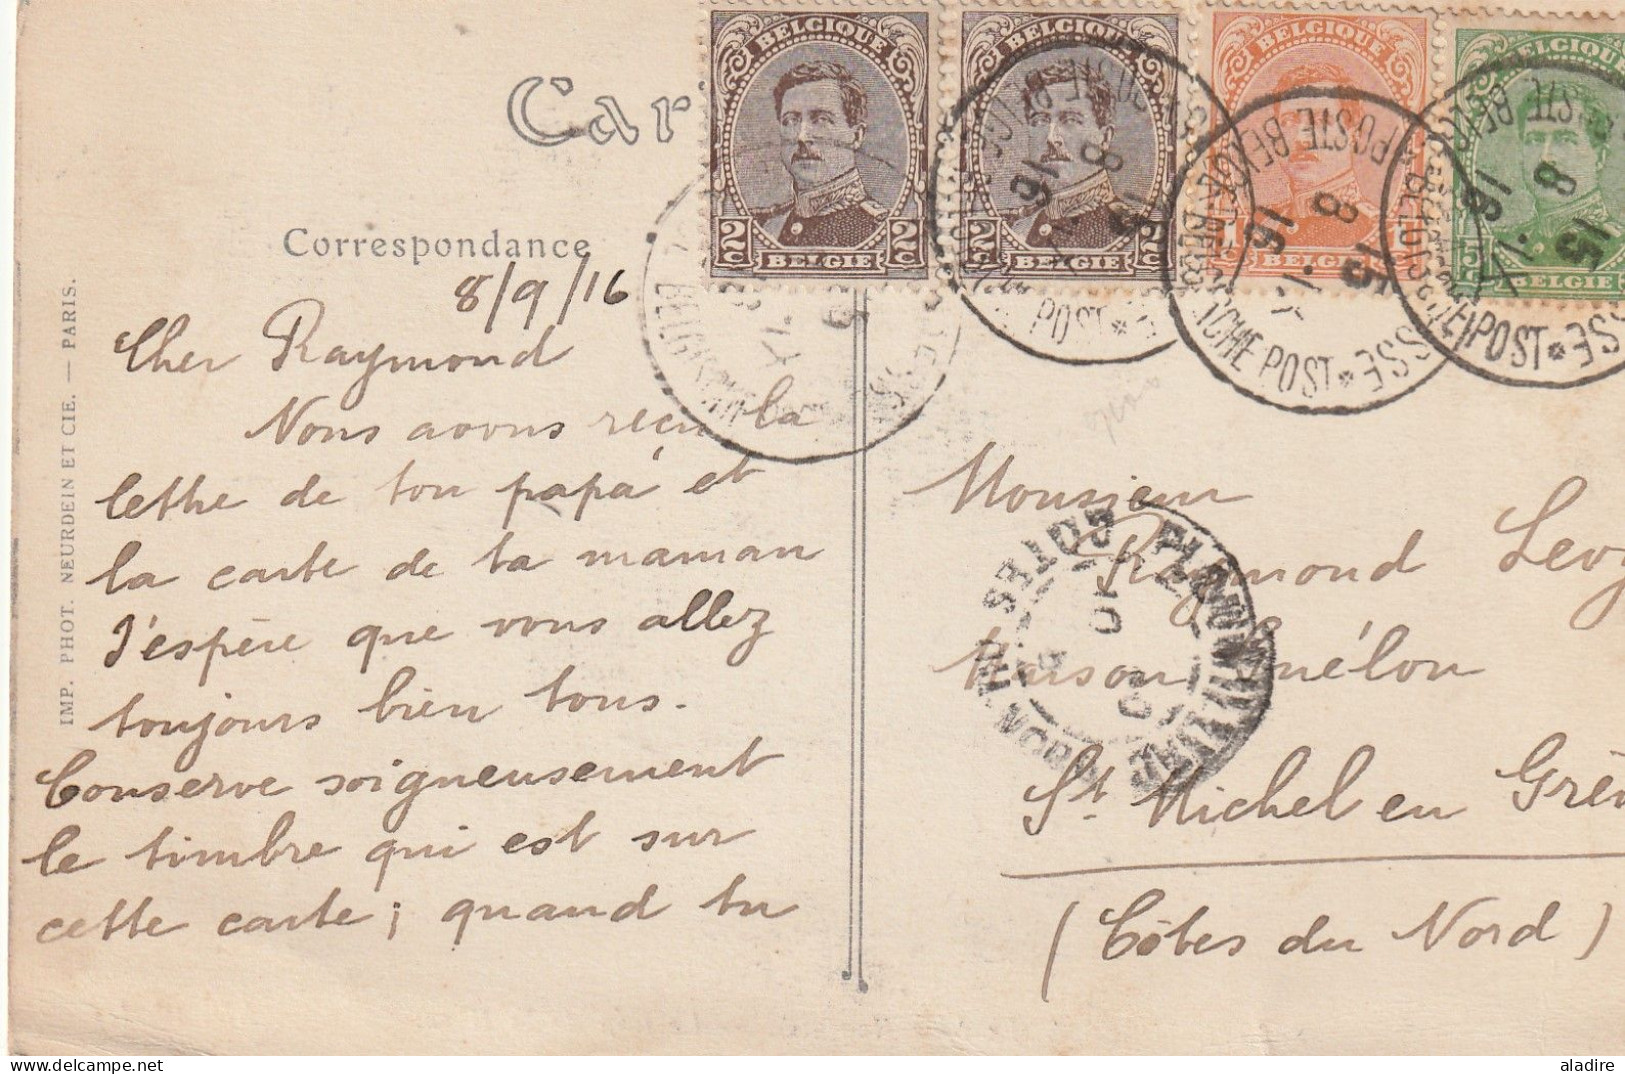 1914/1918 - Collection de 9 enveloppes et cartes - SAINTE ADRESSE - gouvernement belge en exil - Poste belge - Belgisch